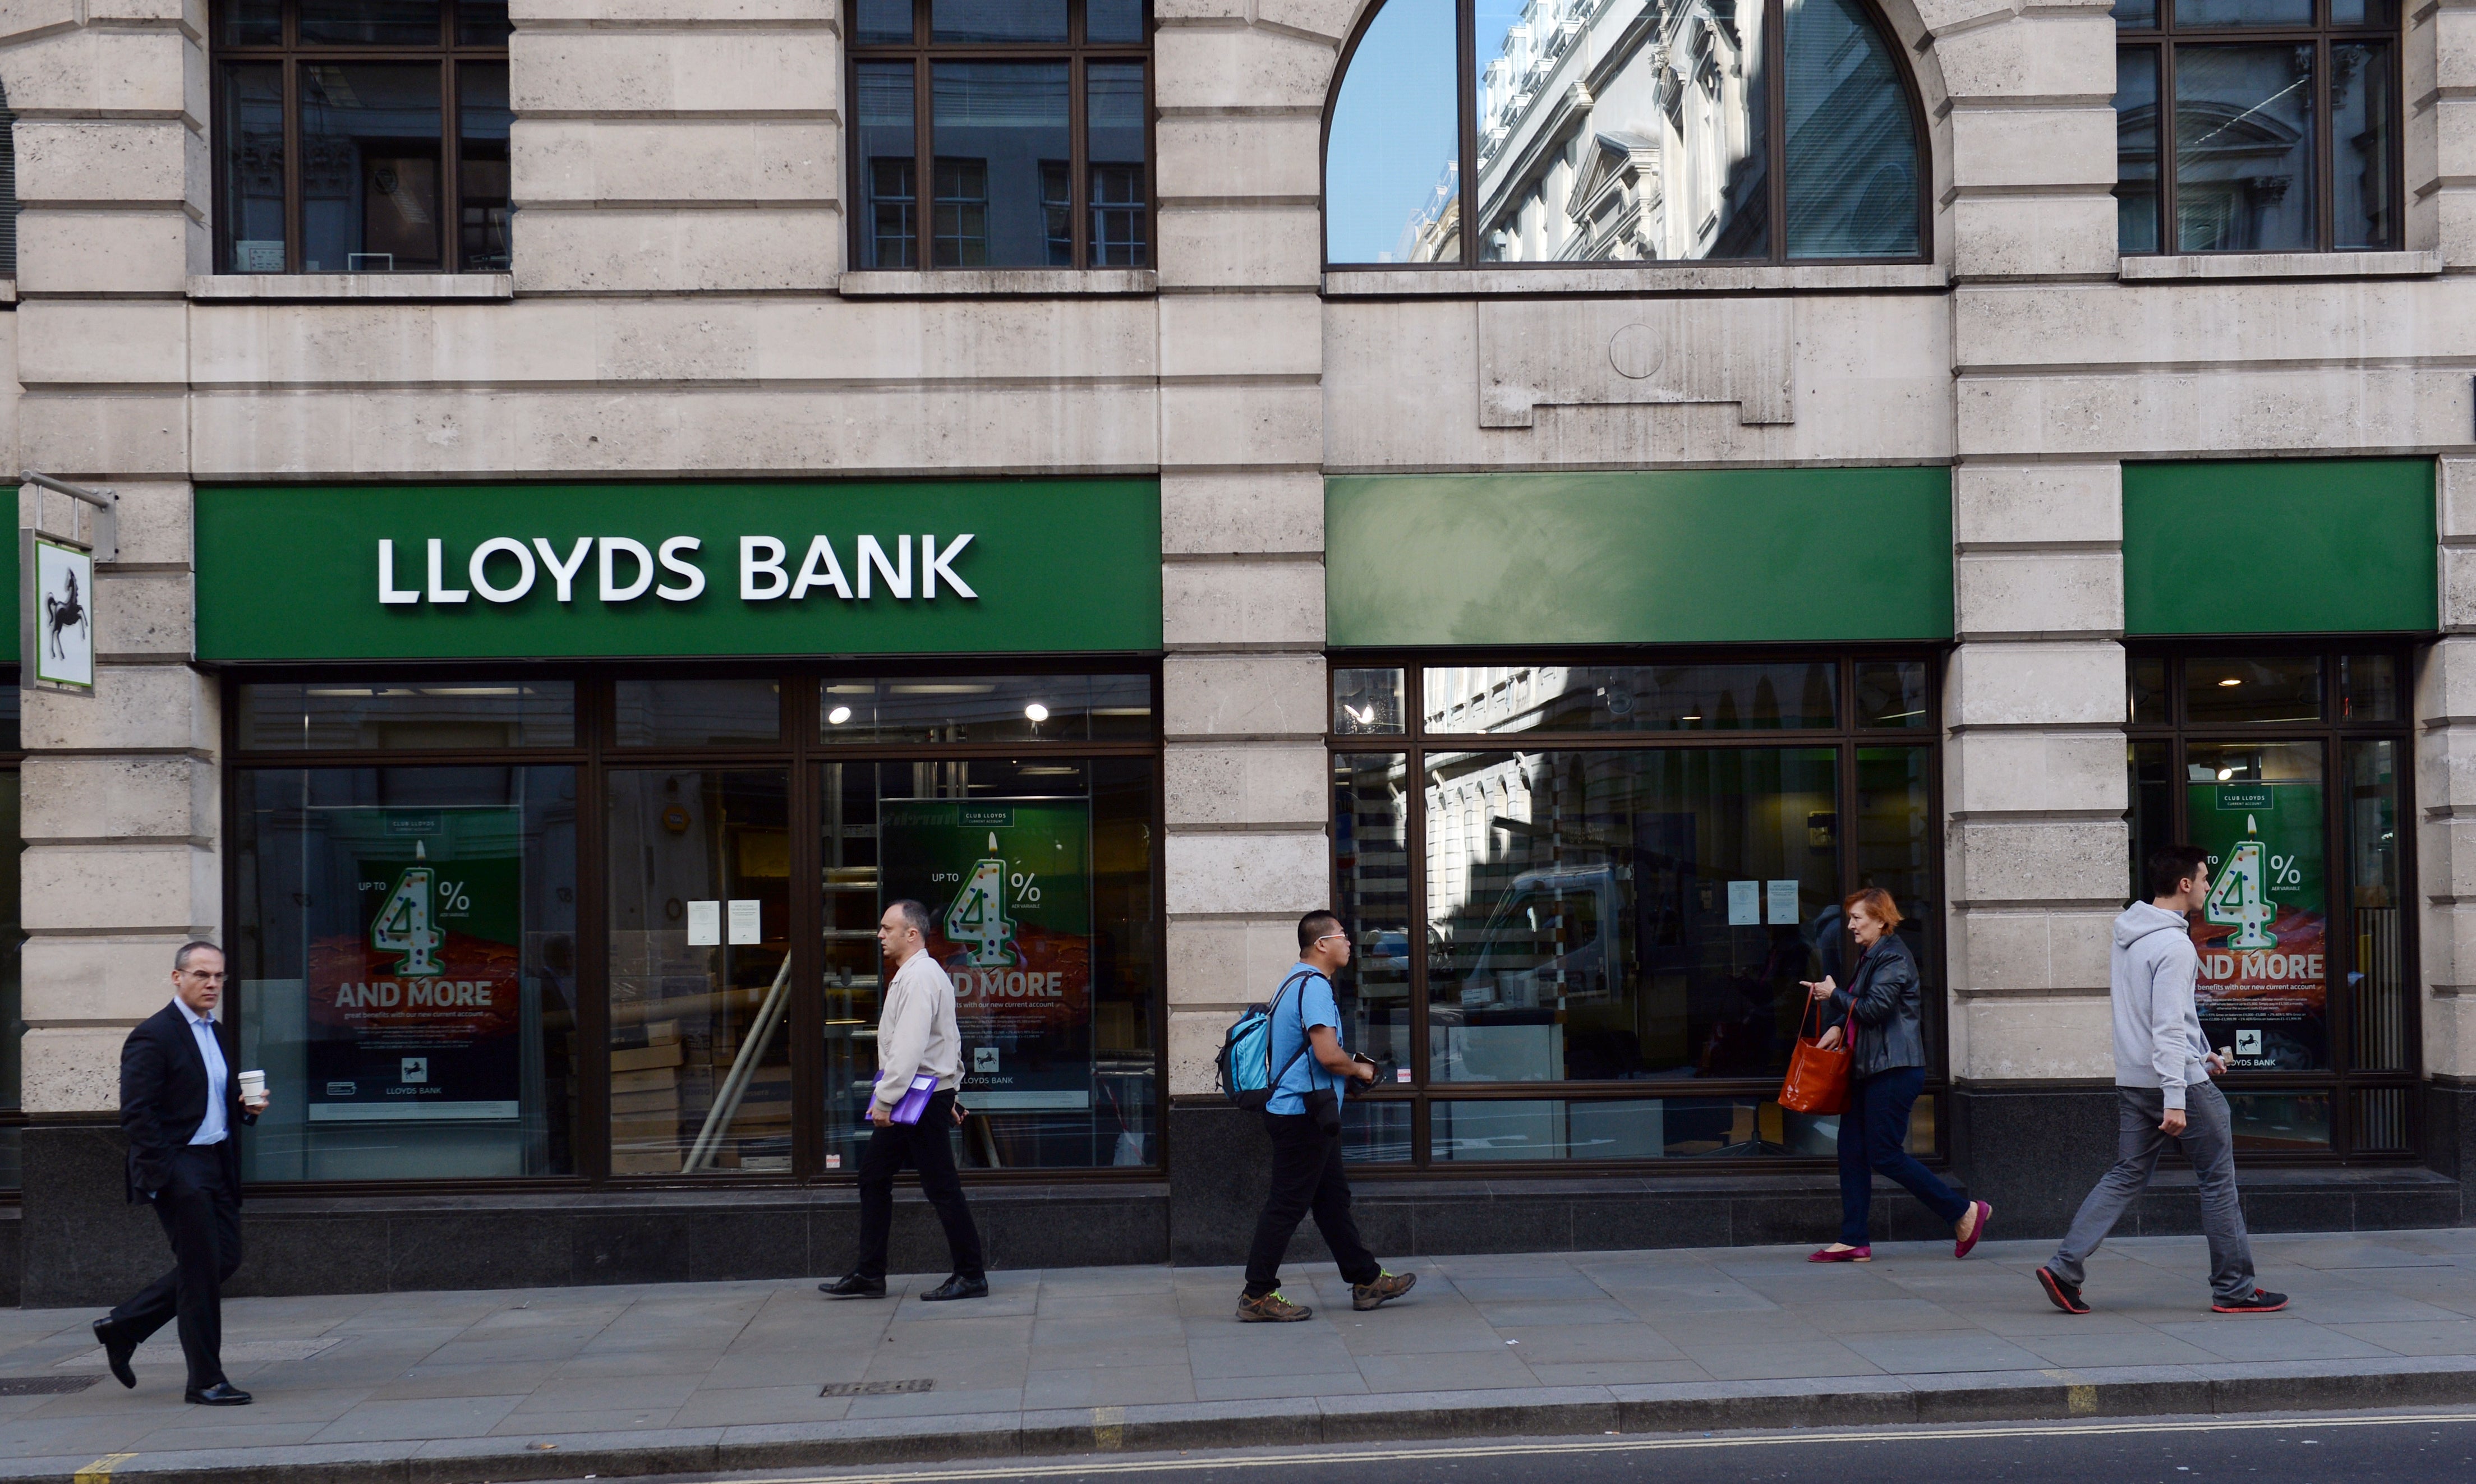 A branch of Lloyds Bank